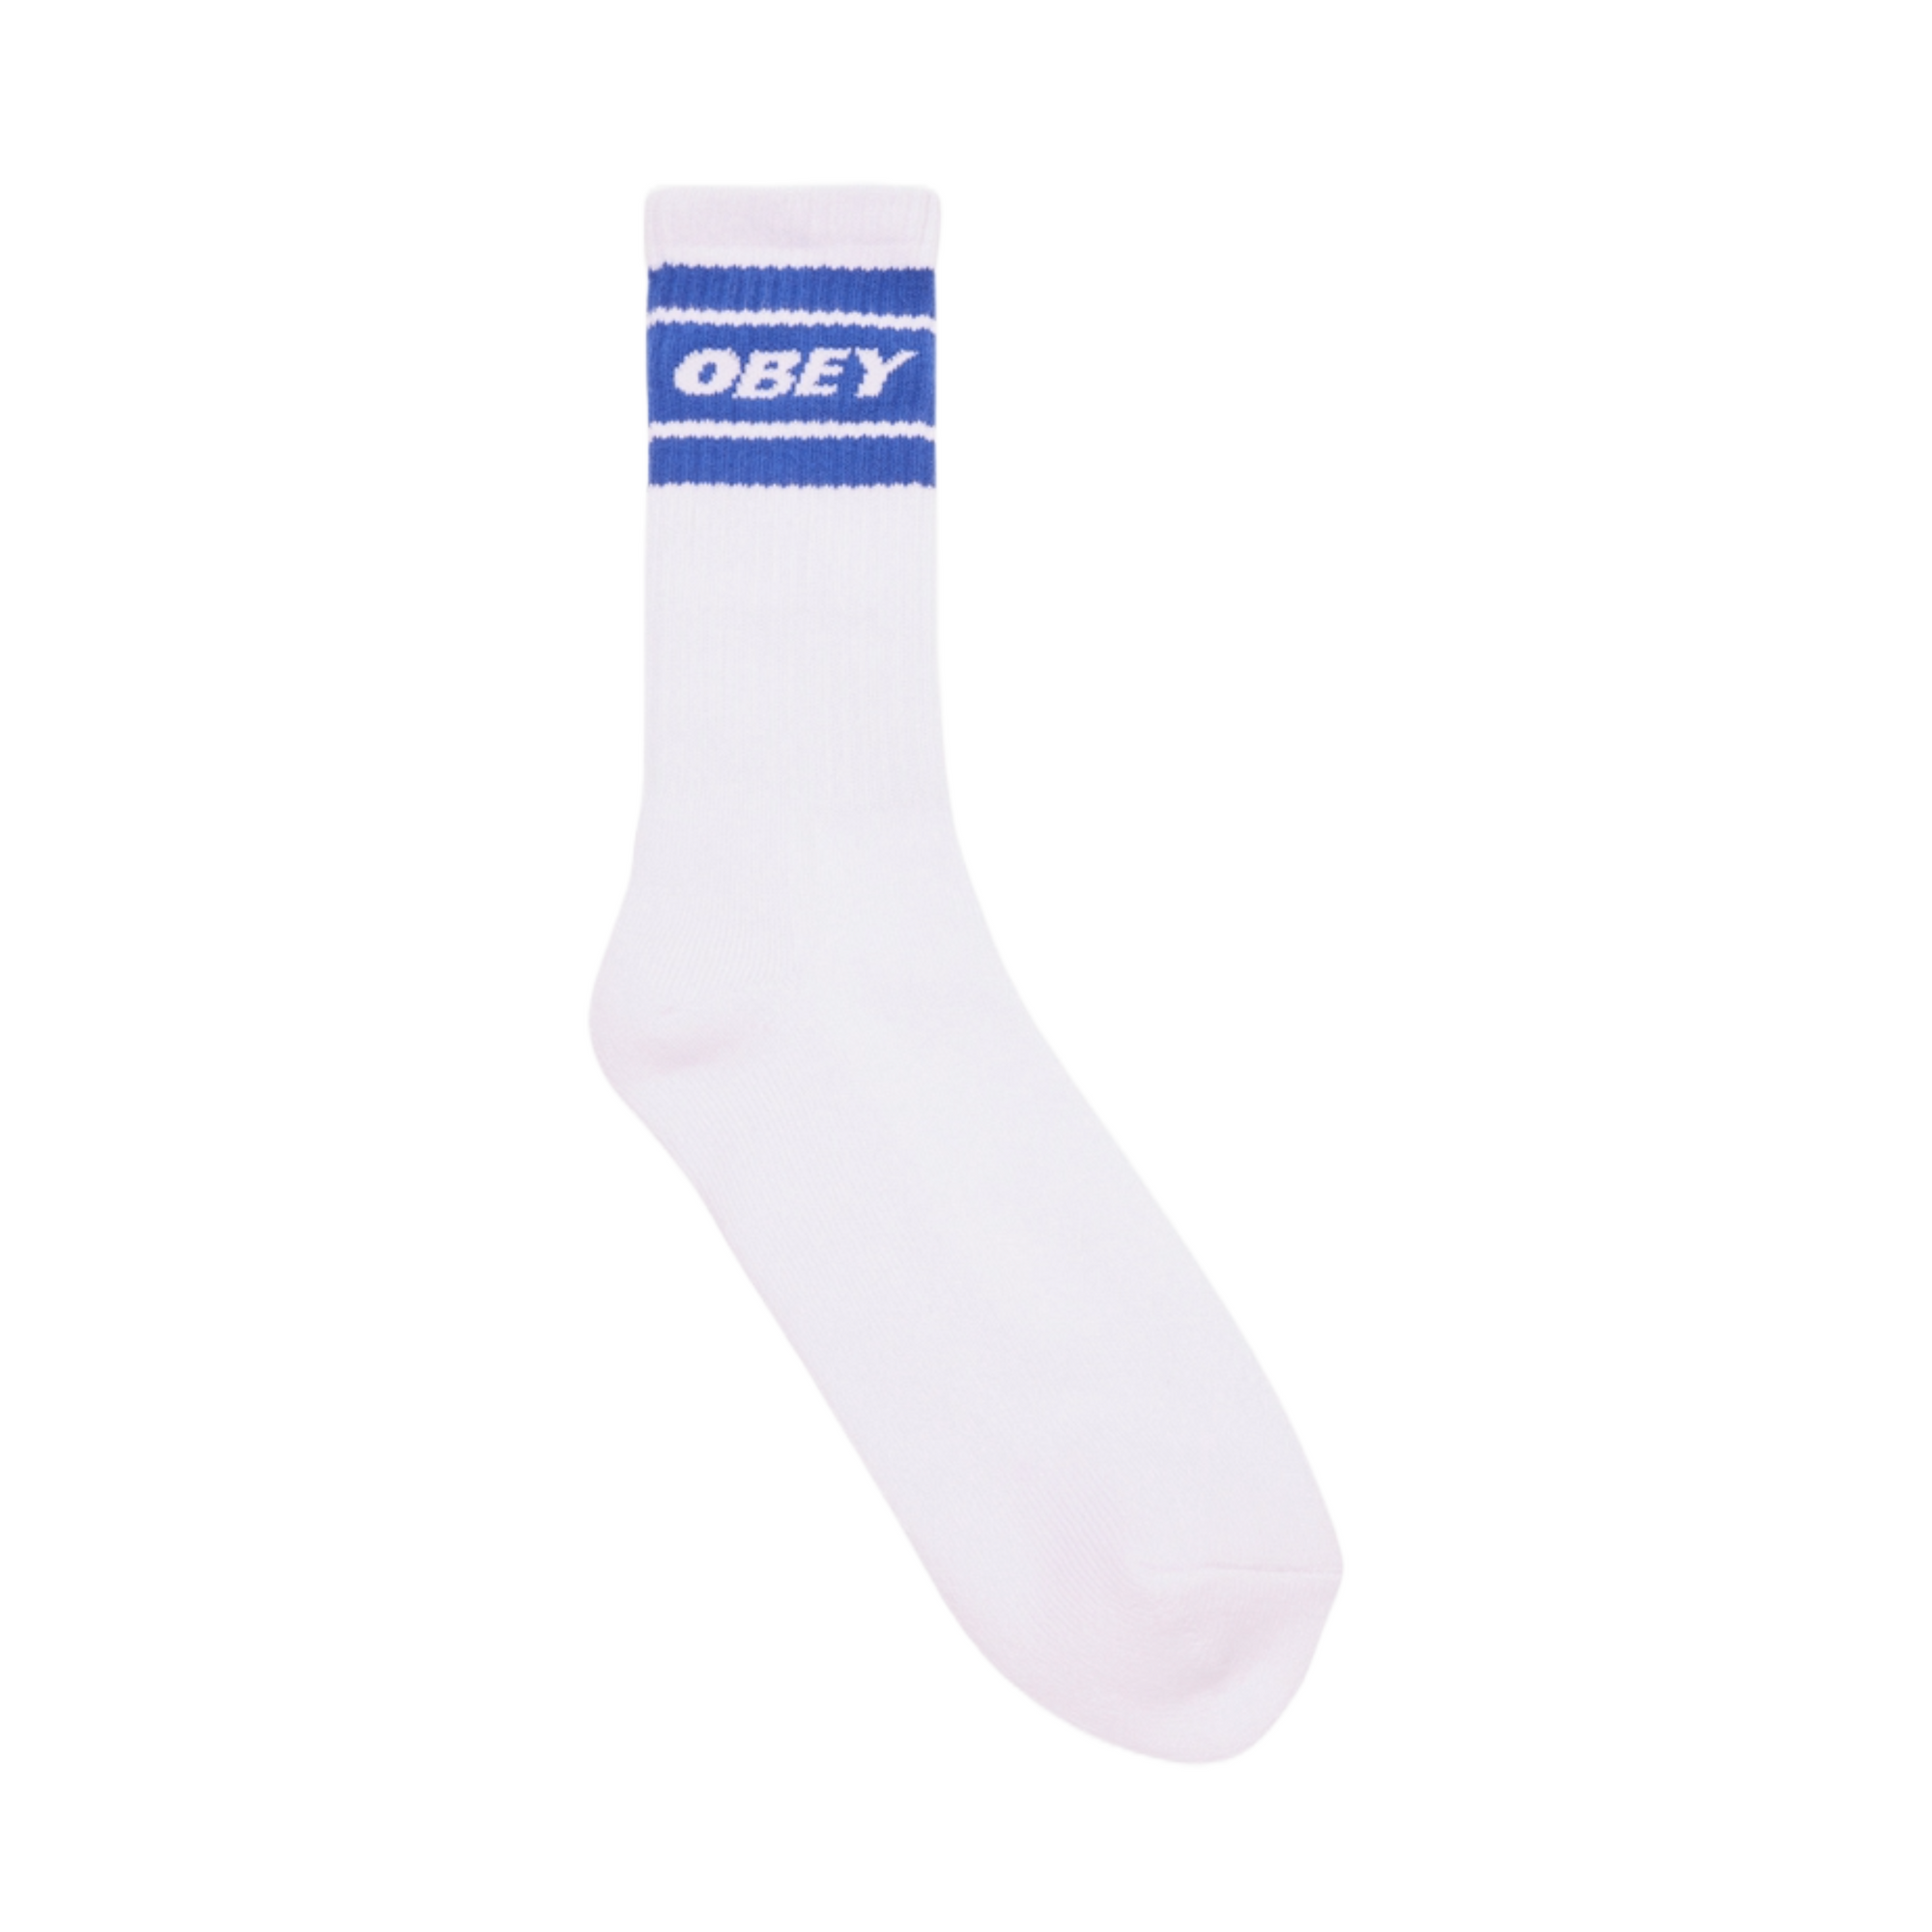 Obey Cooper Socks - Surf Blue / White